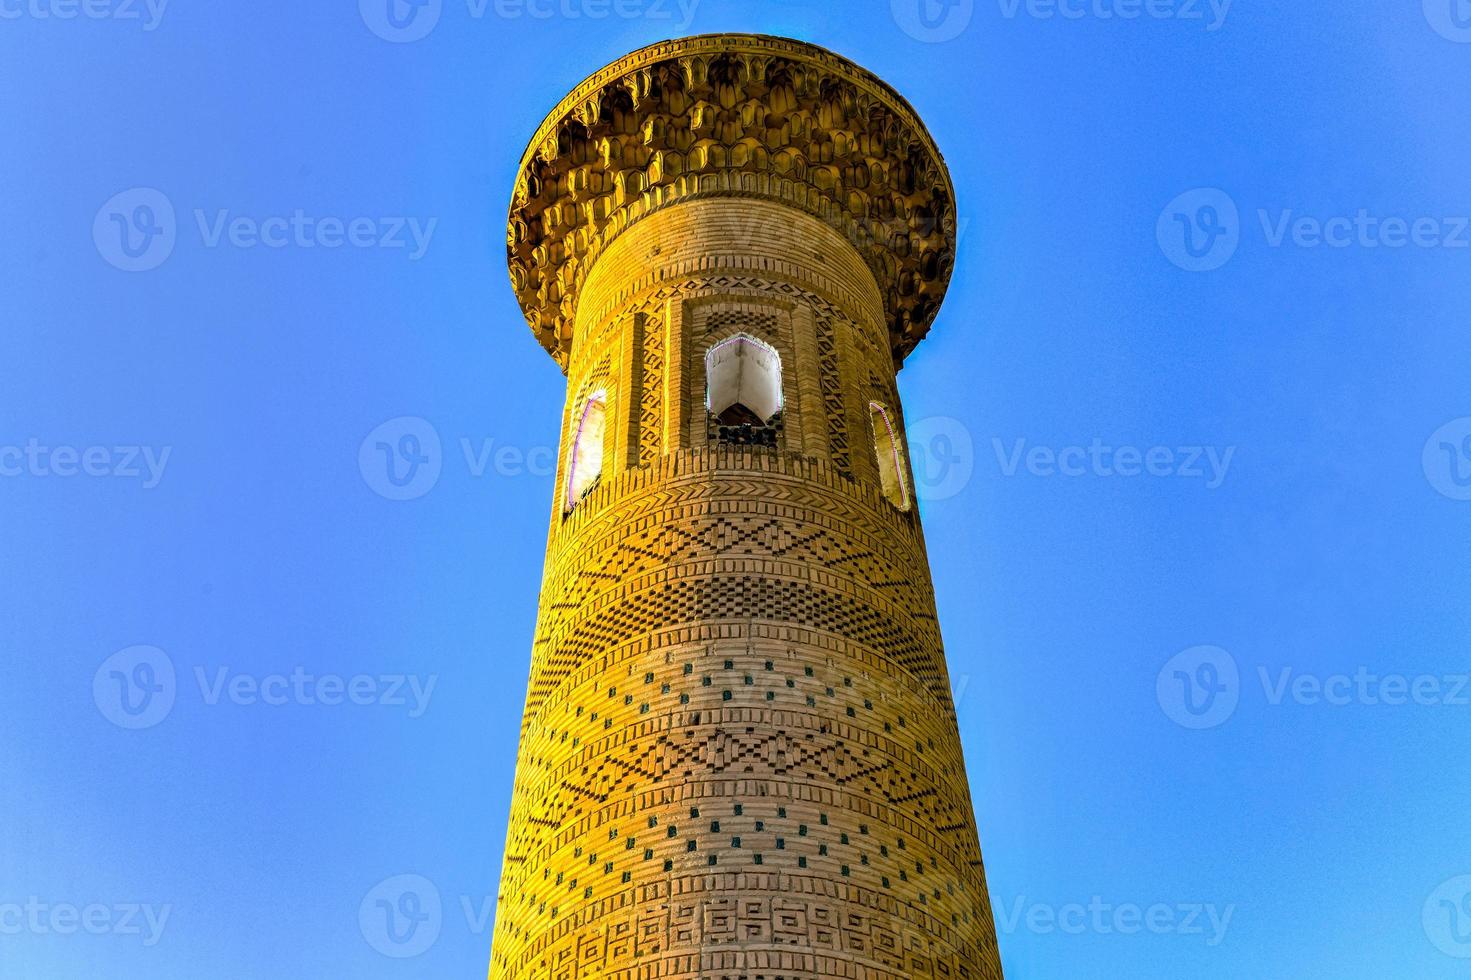 sayid niaz sheliker minarett, in der nähe des osttors von chiwa, in usbekistan. foto